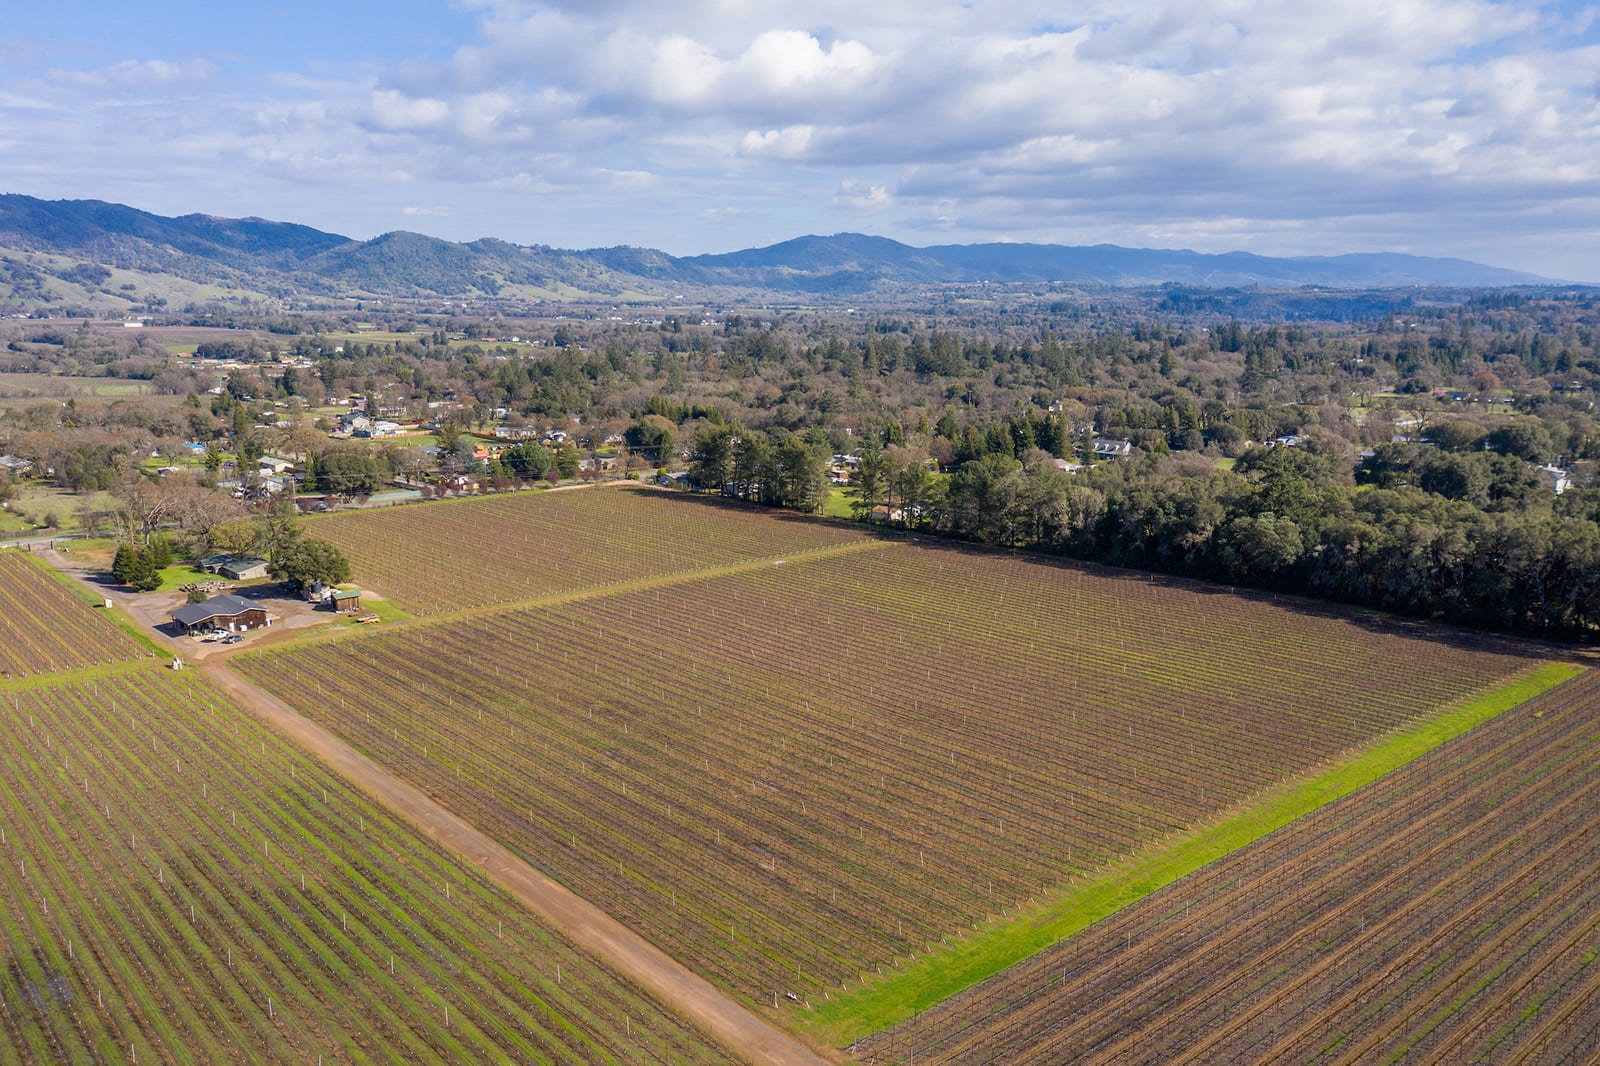 17 Acre Vineyard Redwood Valley